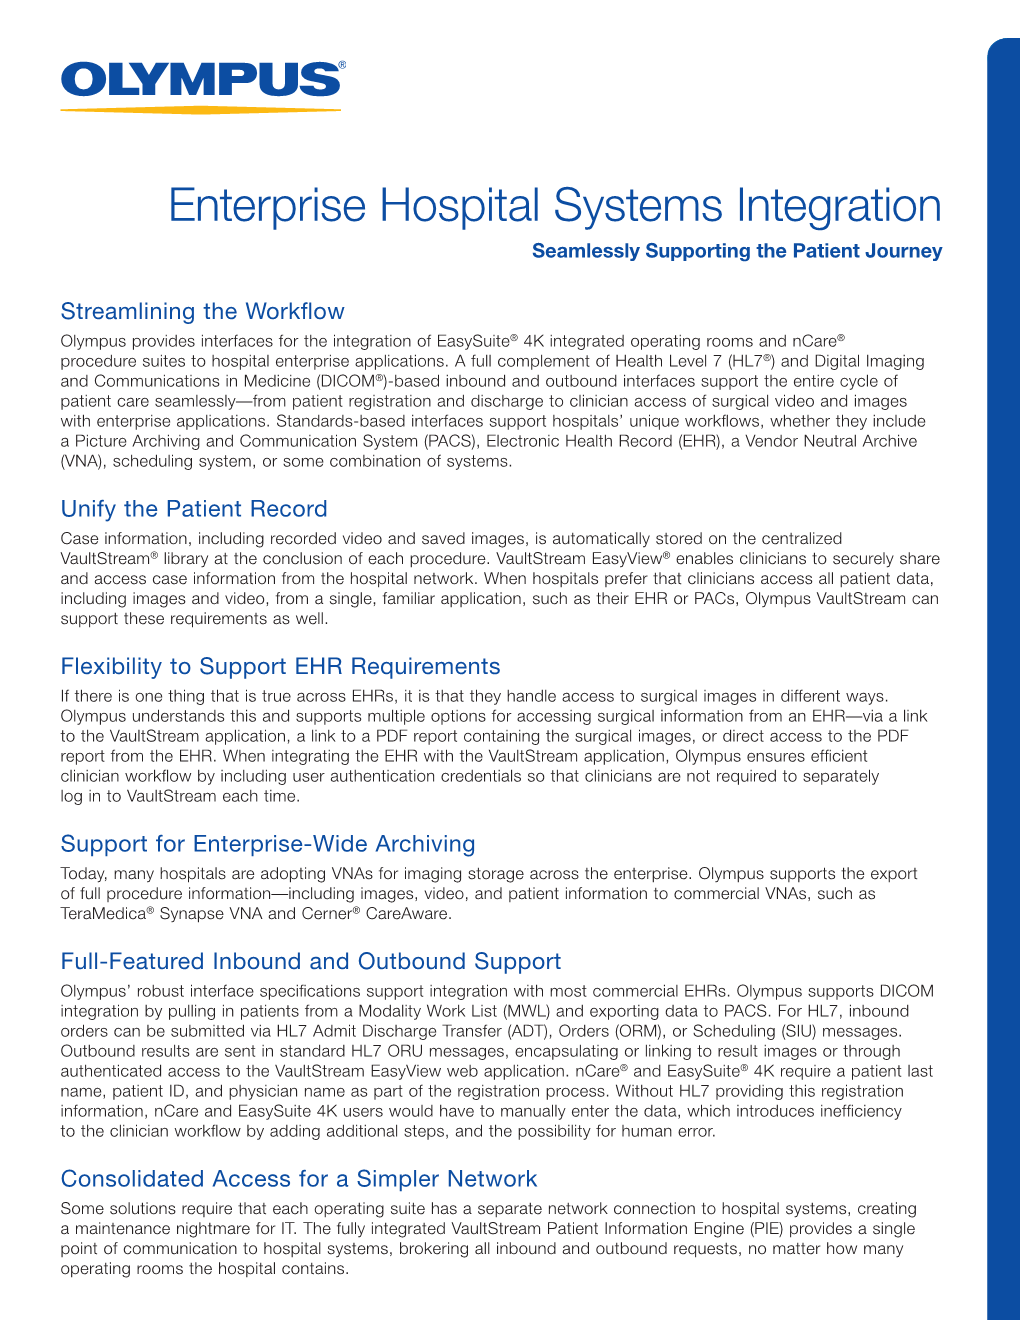 Enterprise Hospital Systems Integration Product Sheet